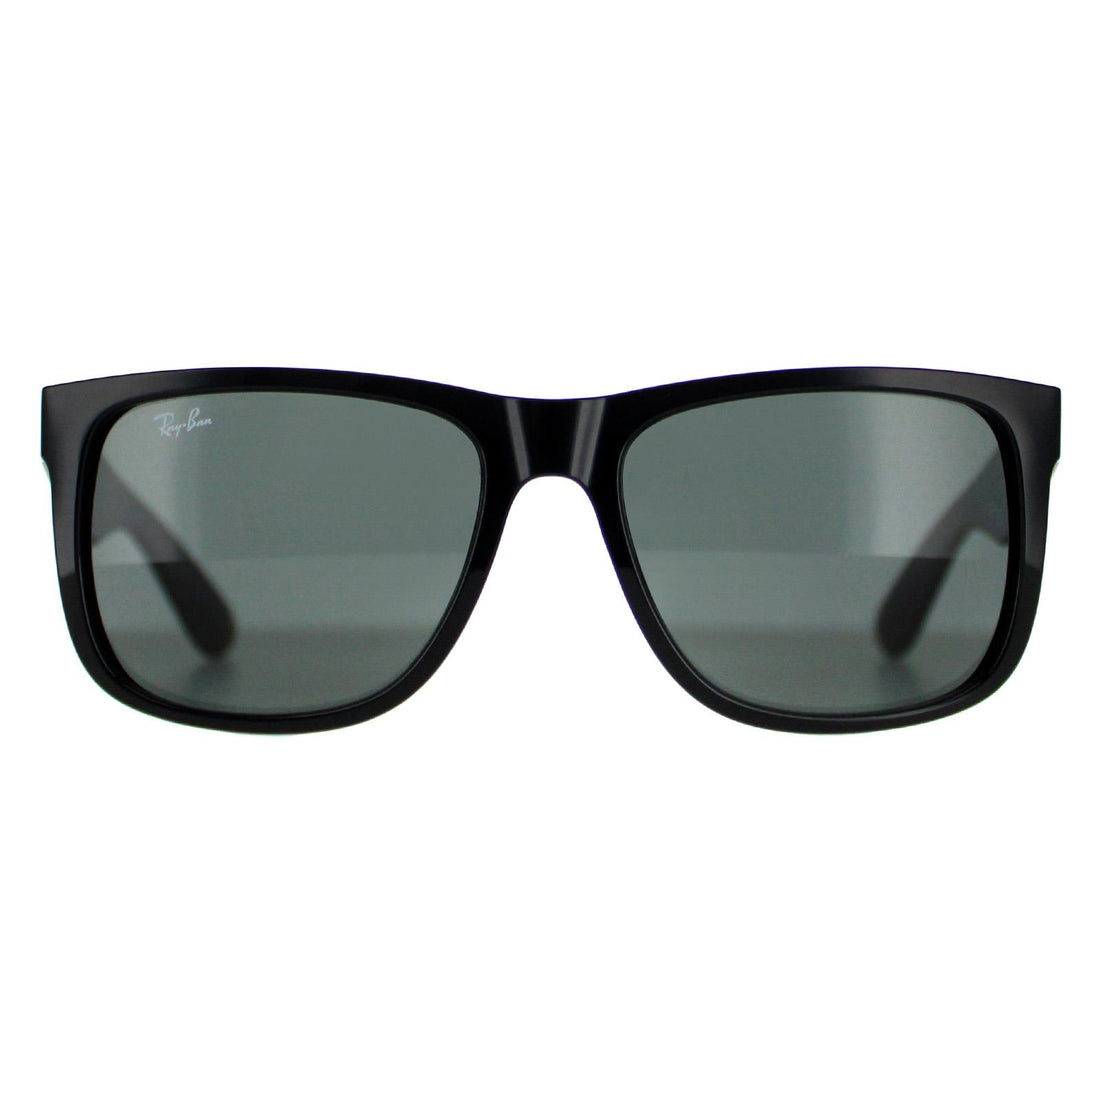 Ray-Ban Justin Classic RB4165 Sunglasses Shiny Black Green 55